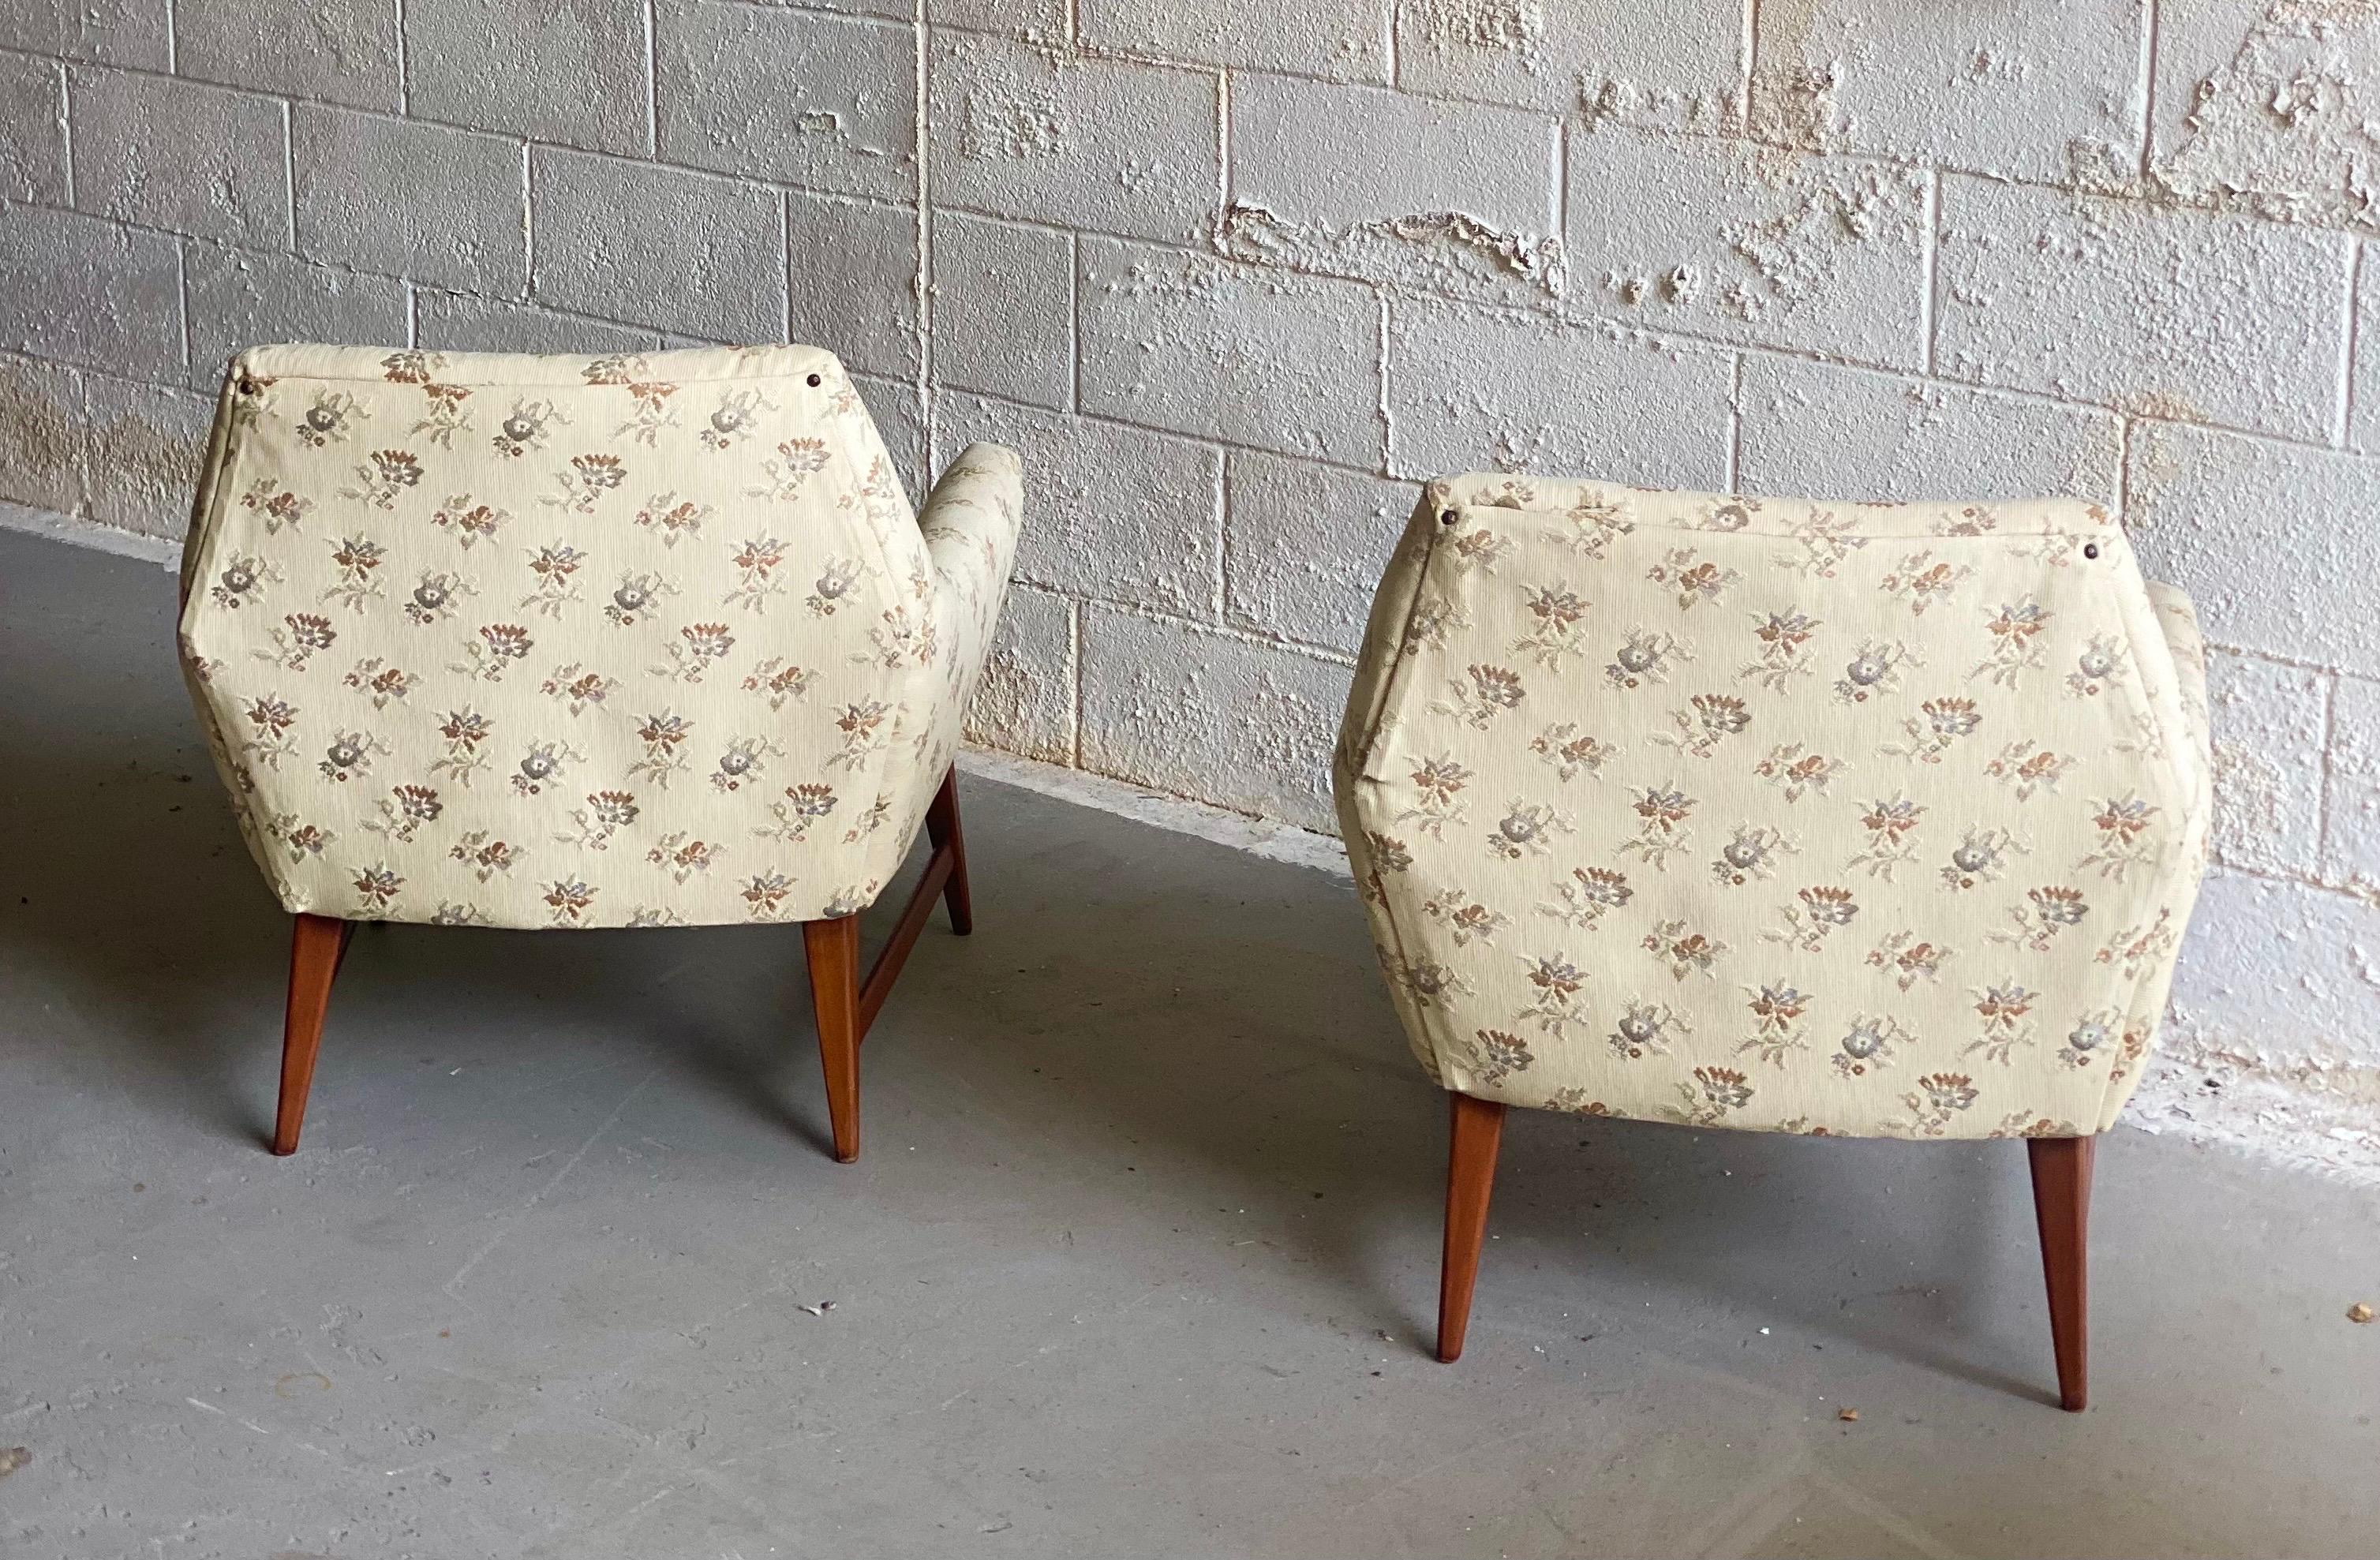 Upholstery 1960s Scandinavian Mid-Century Modern Chairs, a Pair